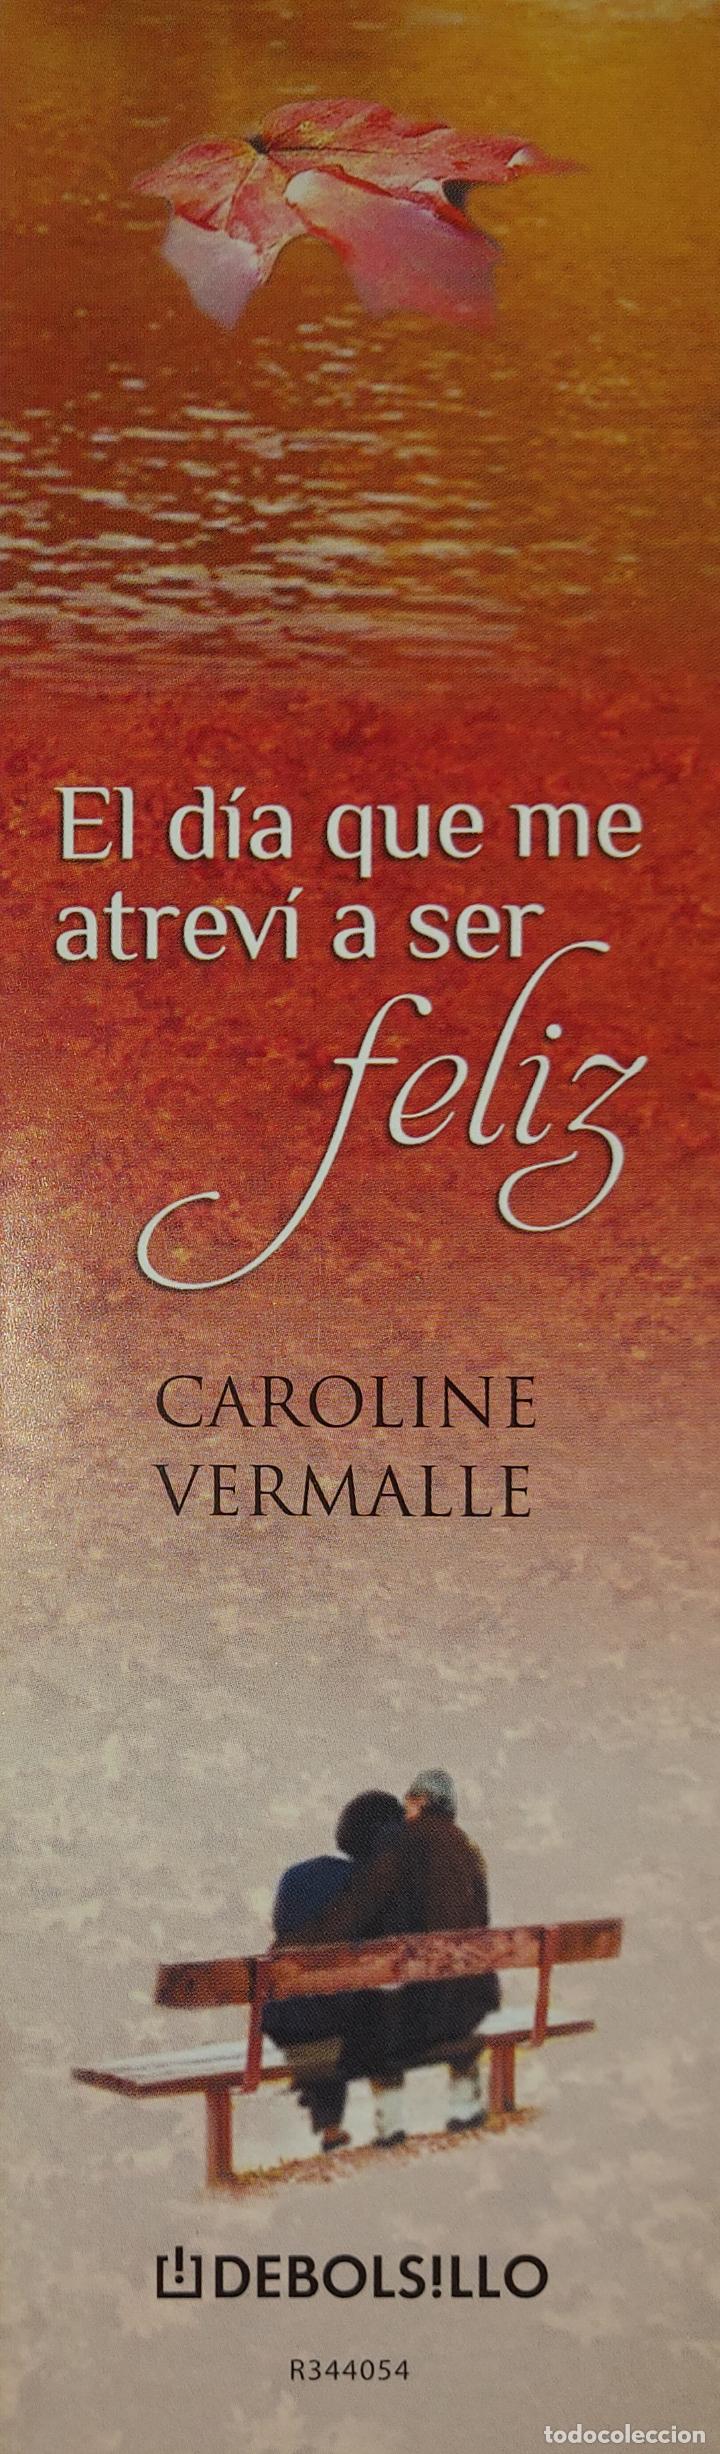 All Books – Caroline Vermalle